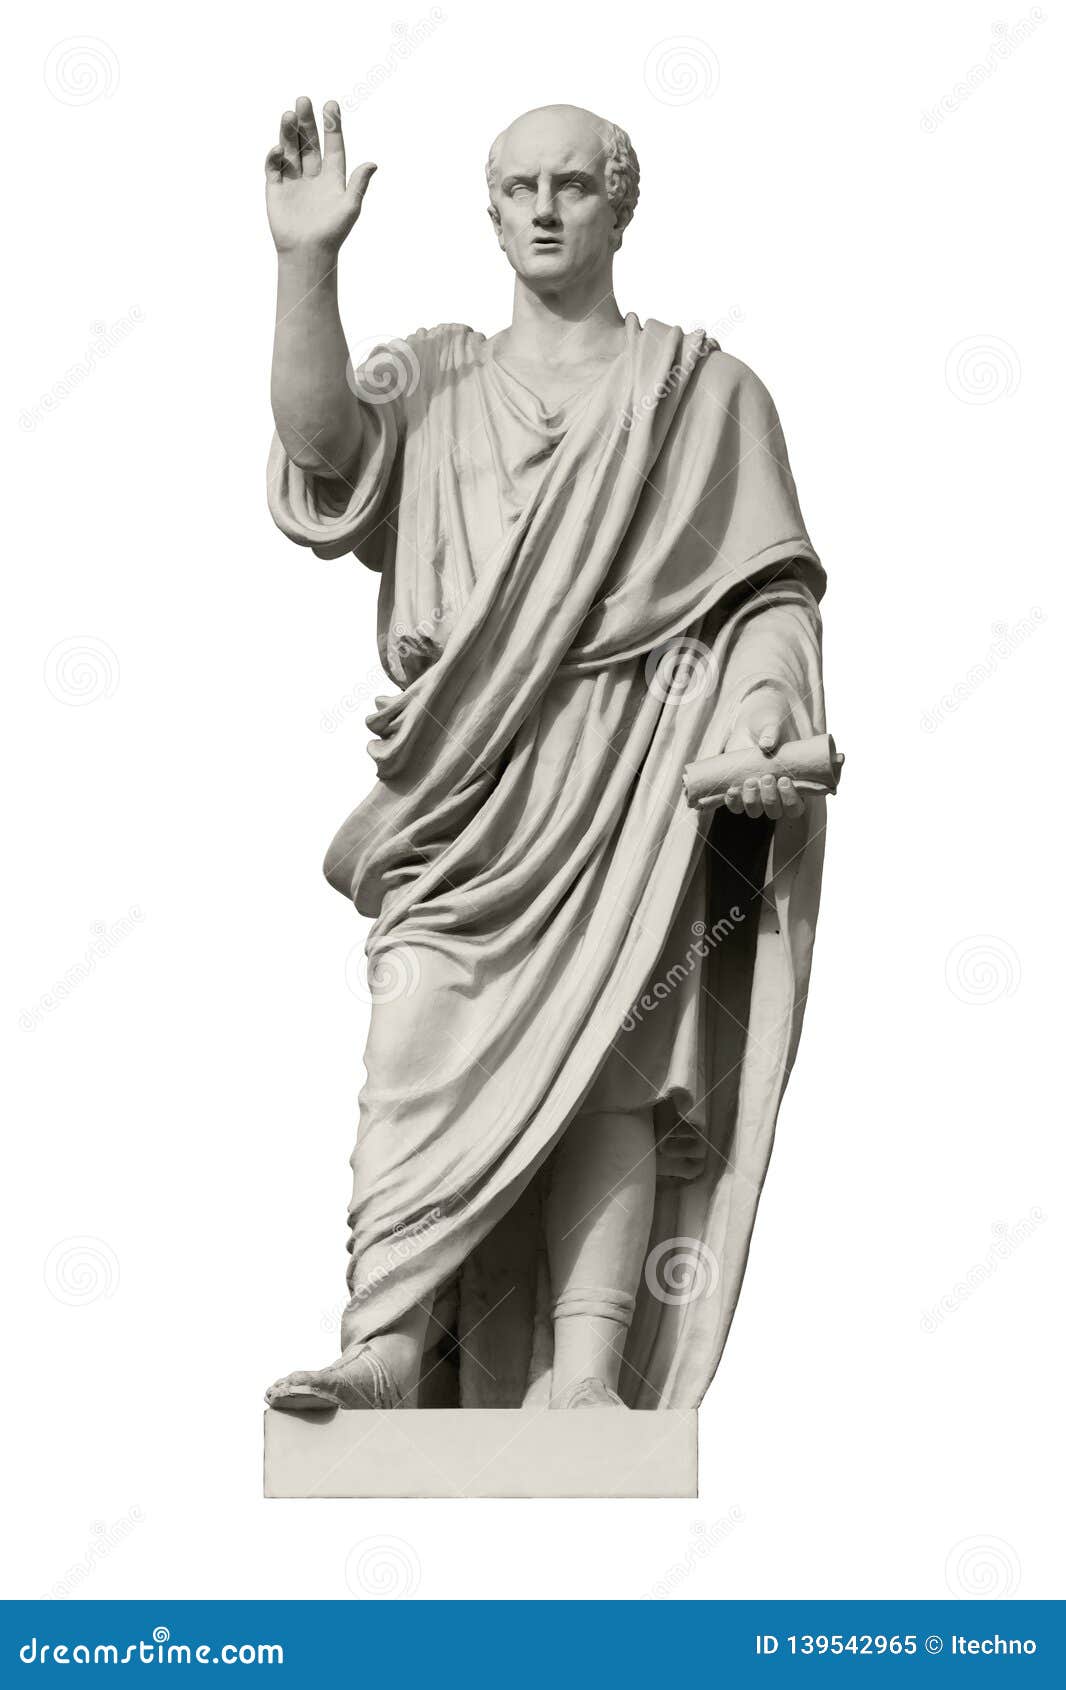 statue of cicero, a roman statesman, lawyer, orator and philosopher